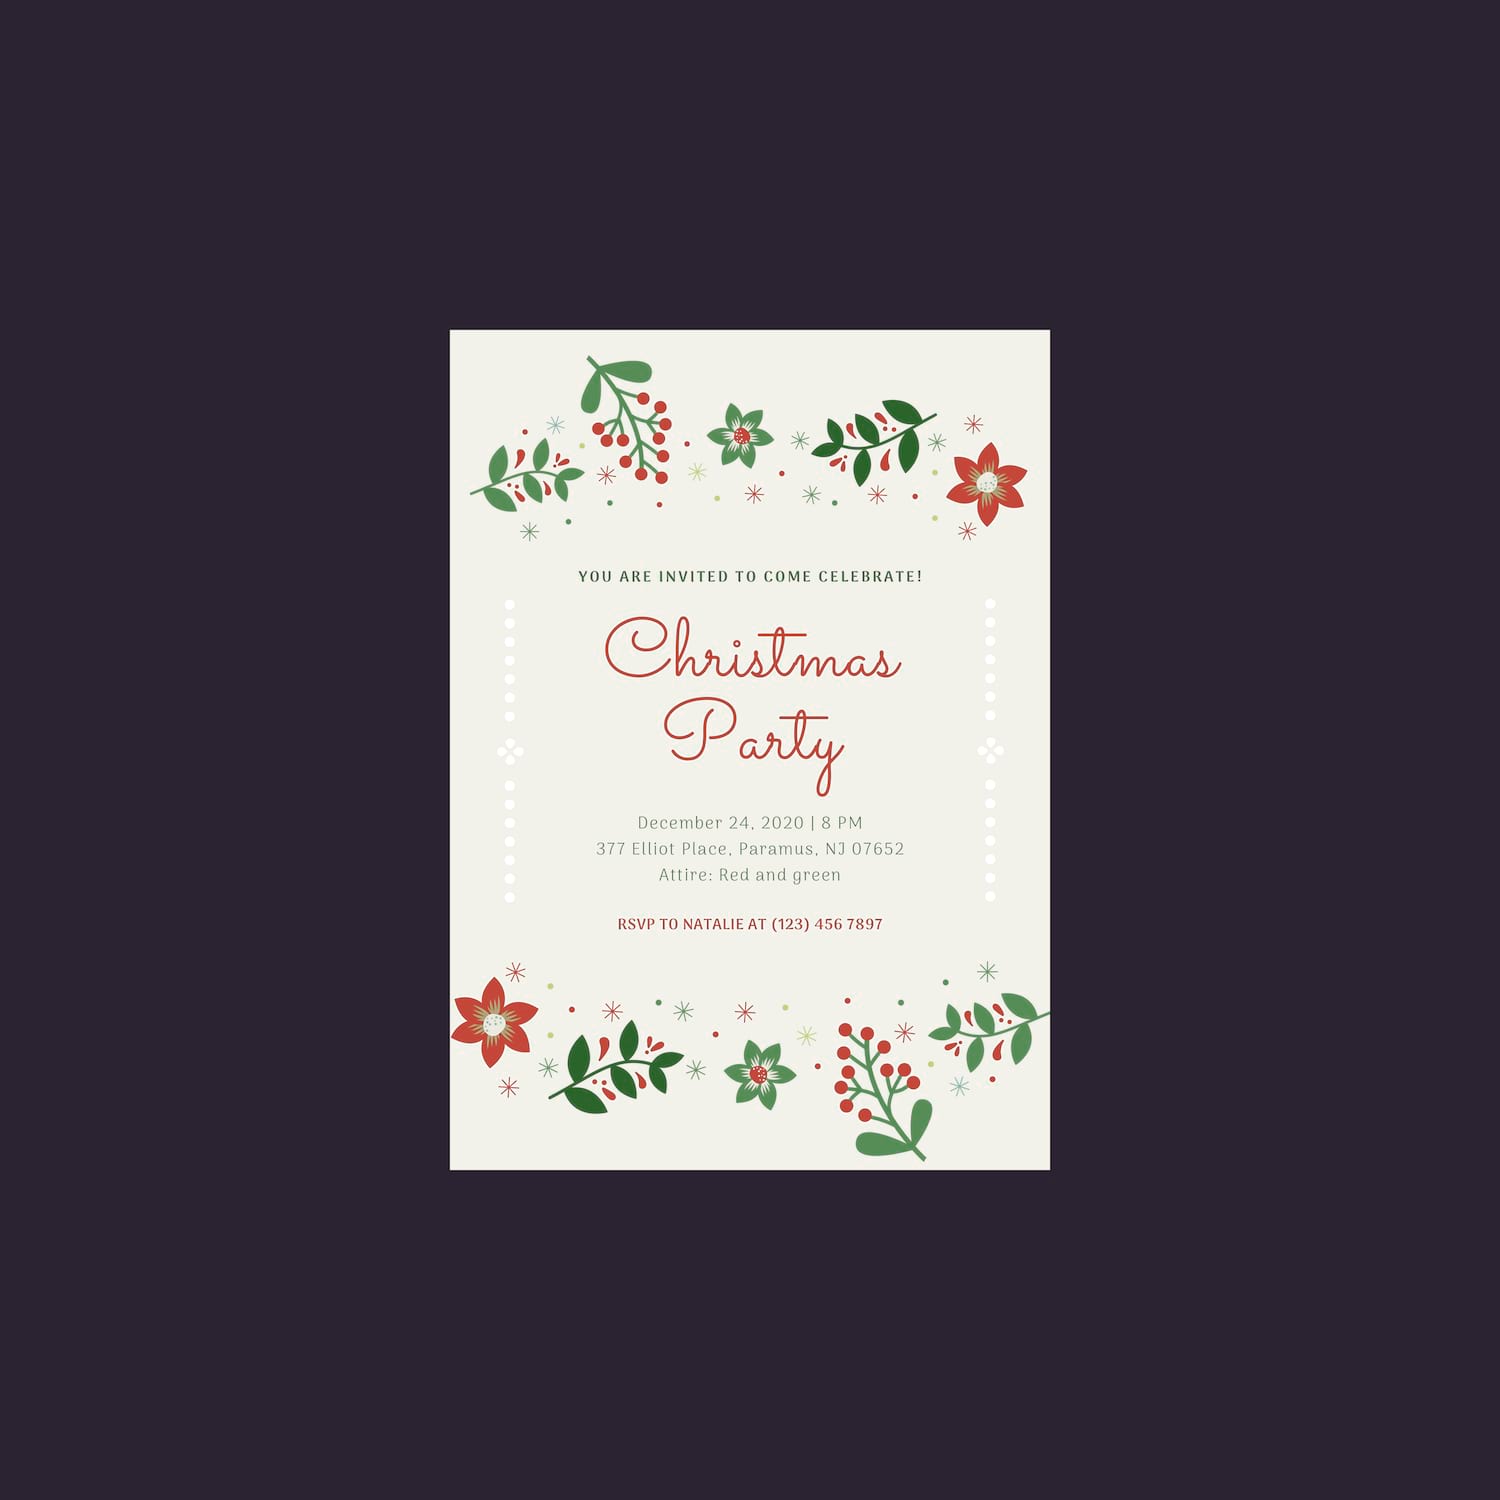  Natasha Medvetsky. Christmas Party Invitation. Graphic design. 2020.